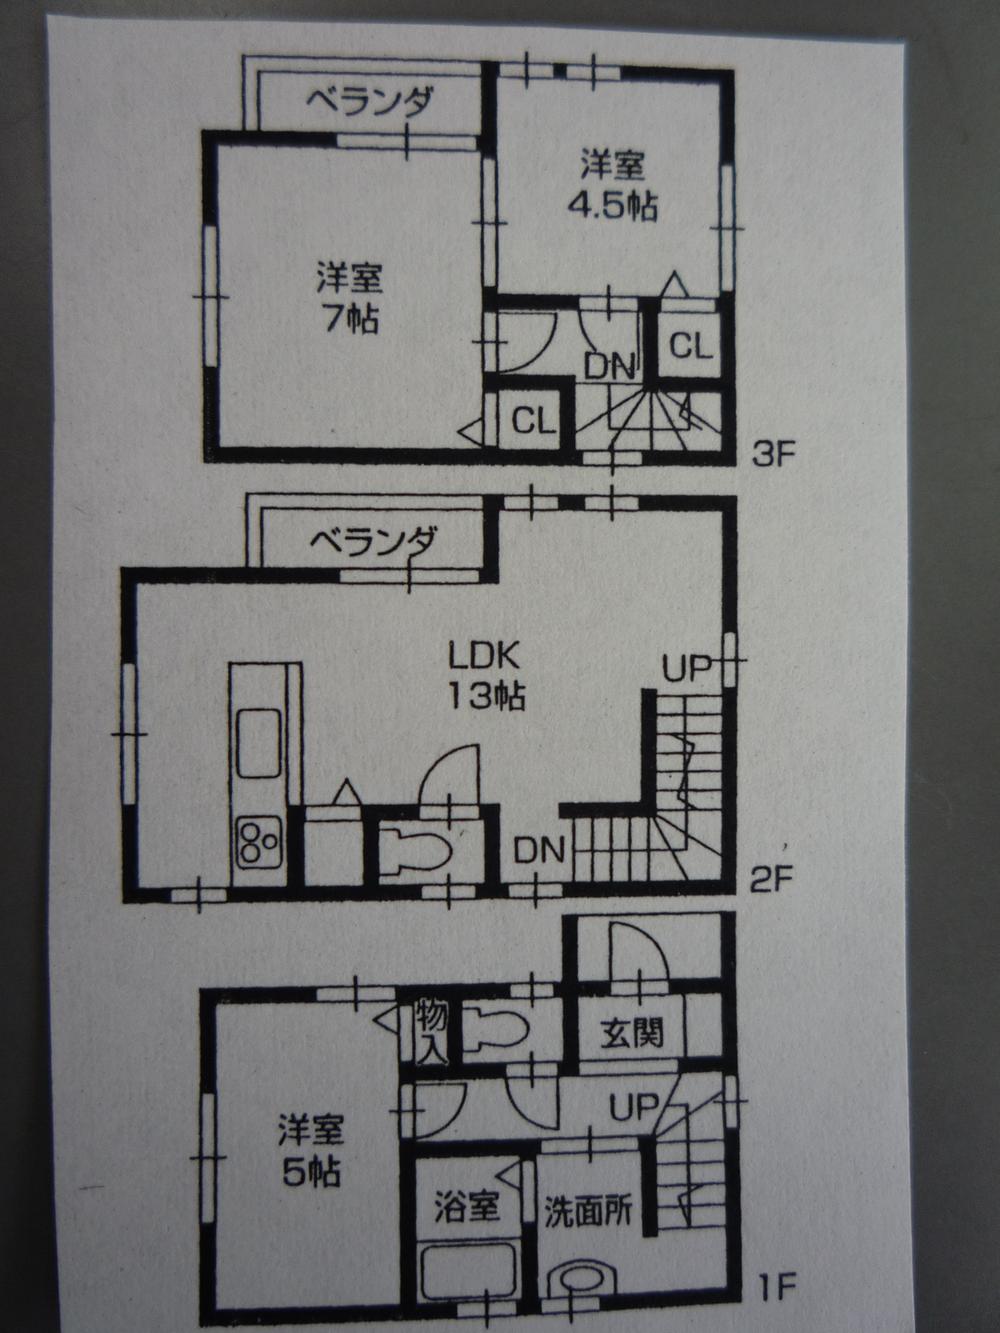 Floor plan. 29,800,000 yen, 3LDK, Land area 53.82 sq m , Building area 72.86 sq m